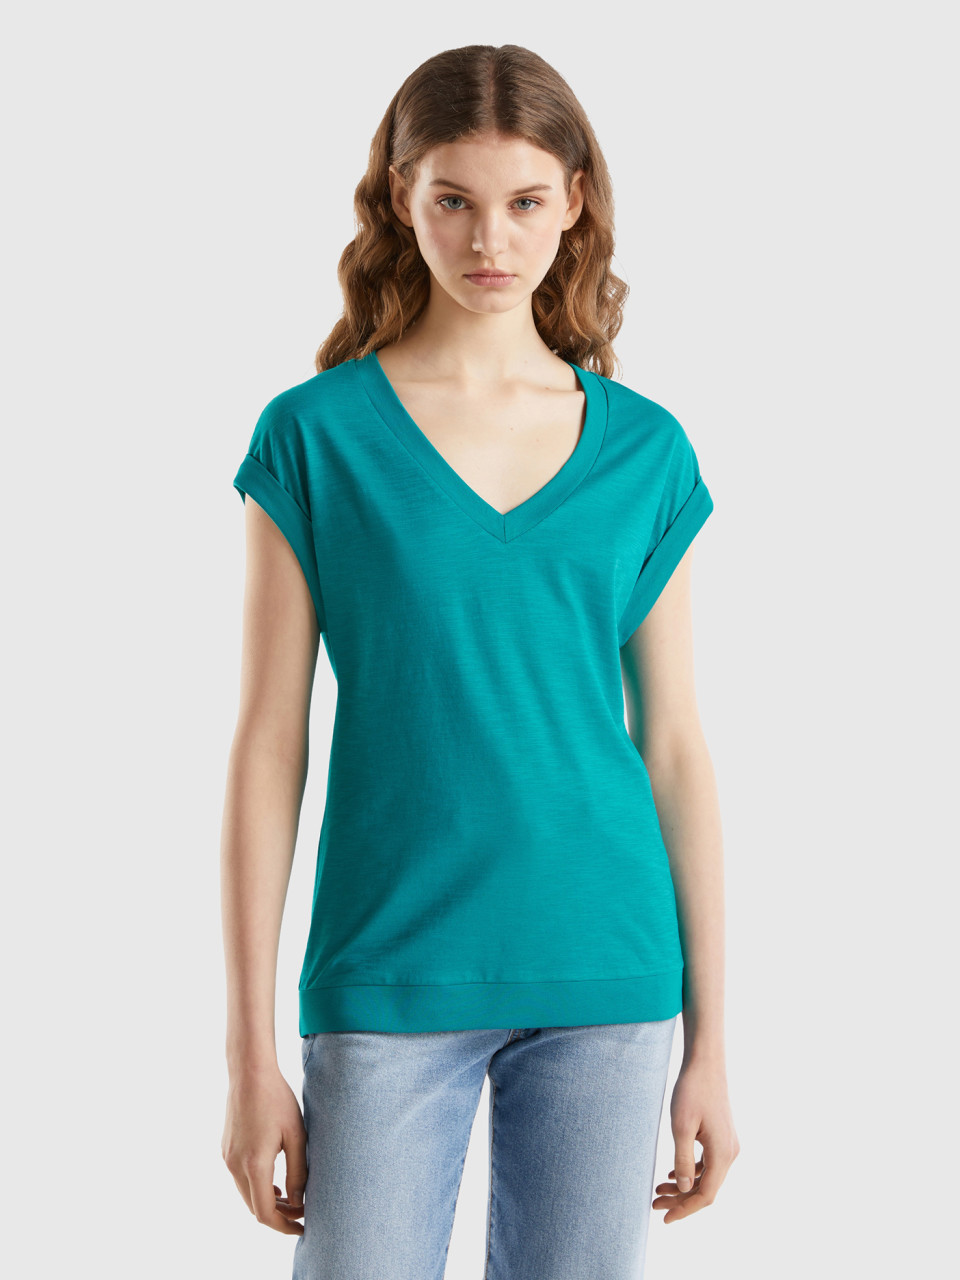 Benetton, Camiseta Con Escote De Pico, Verde Petróleo, Mujer